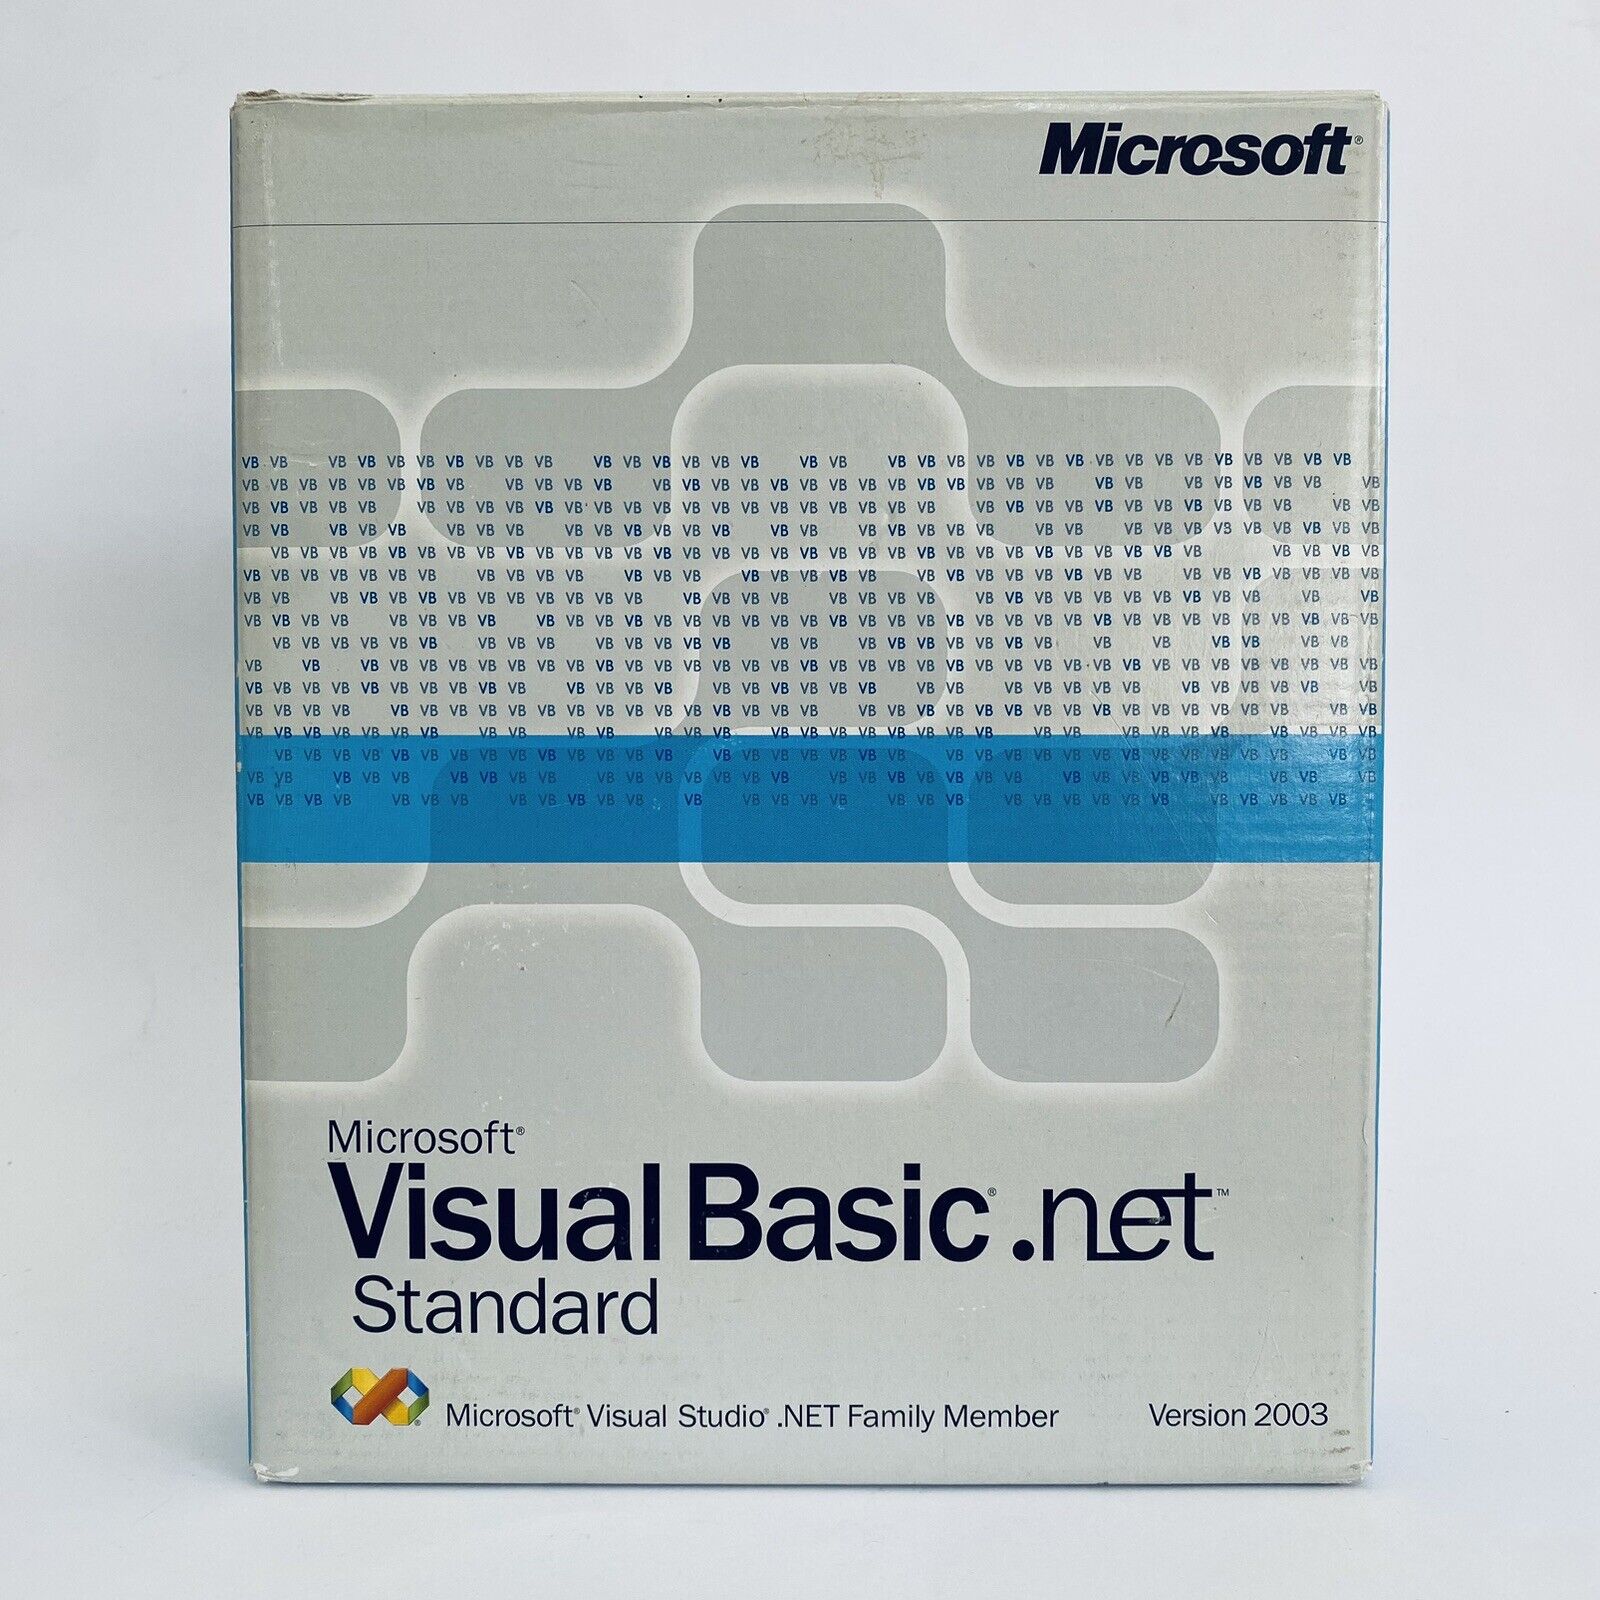 Microsoft Visual Basic .net Standard Version 2003 Microsoft Windows PC Software